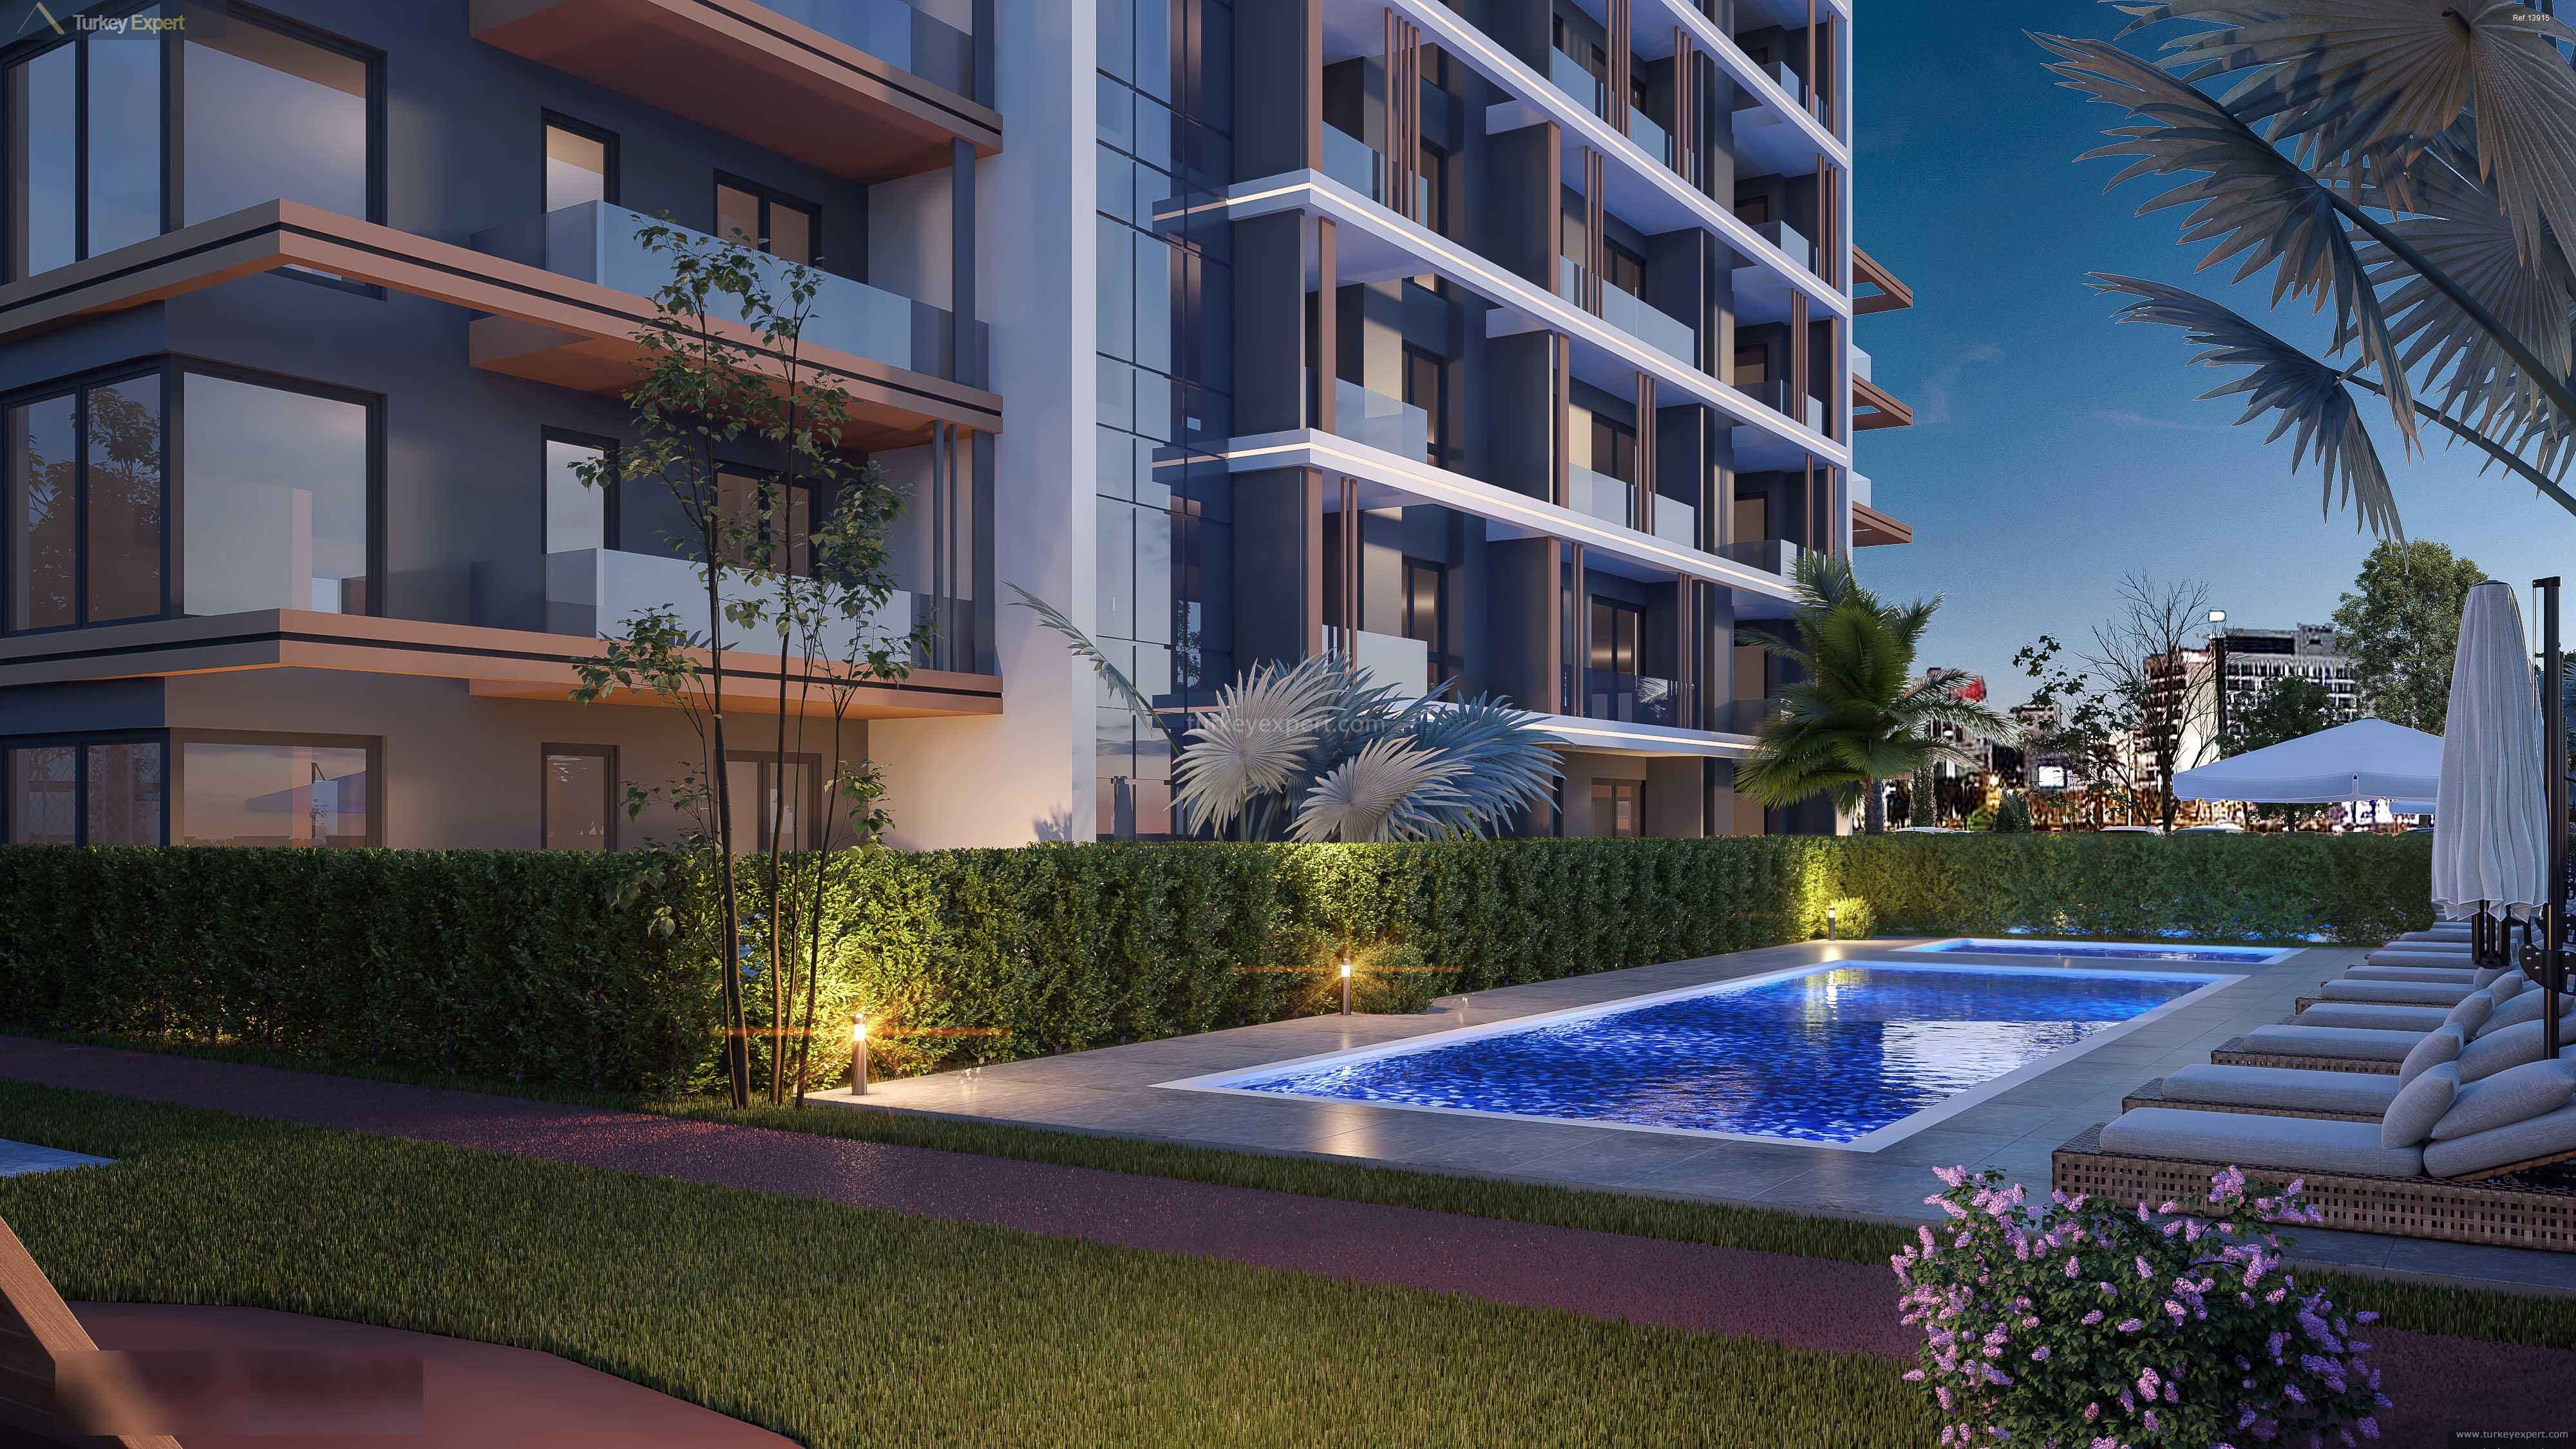 102antalya altintas apartments with a shared pool near the beach1